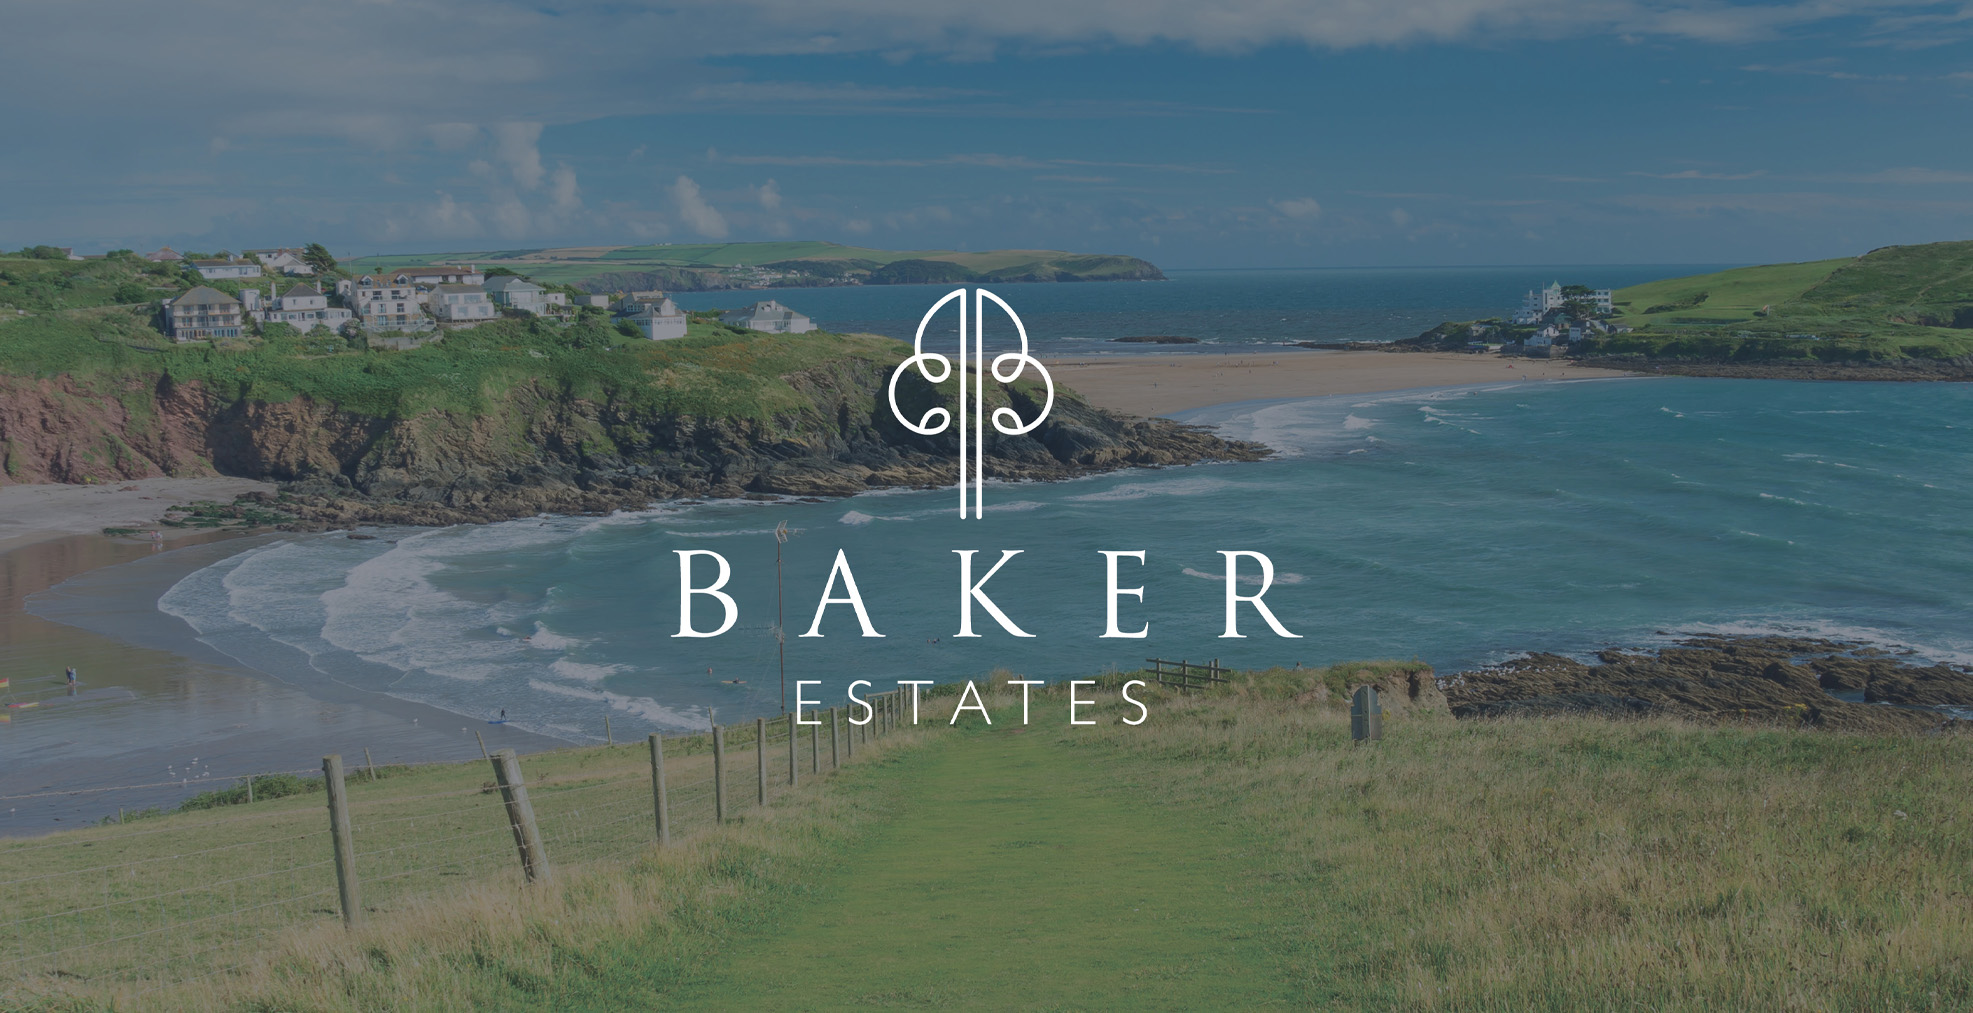 Baker Estates